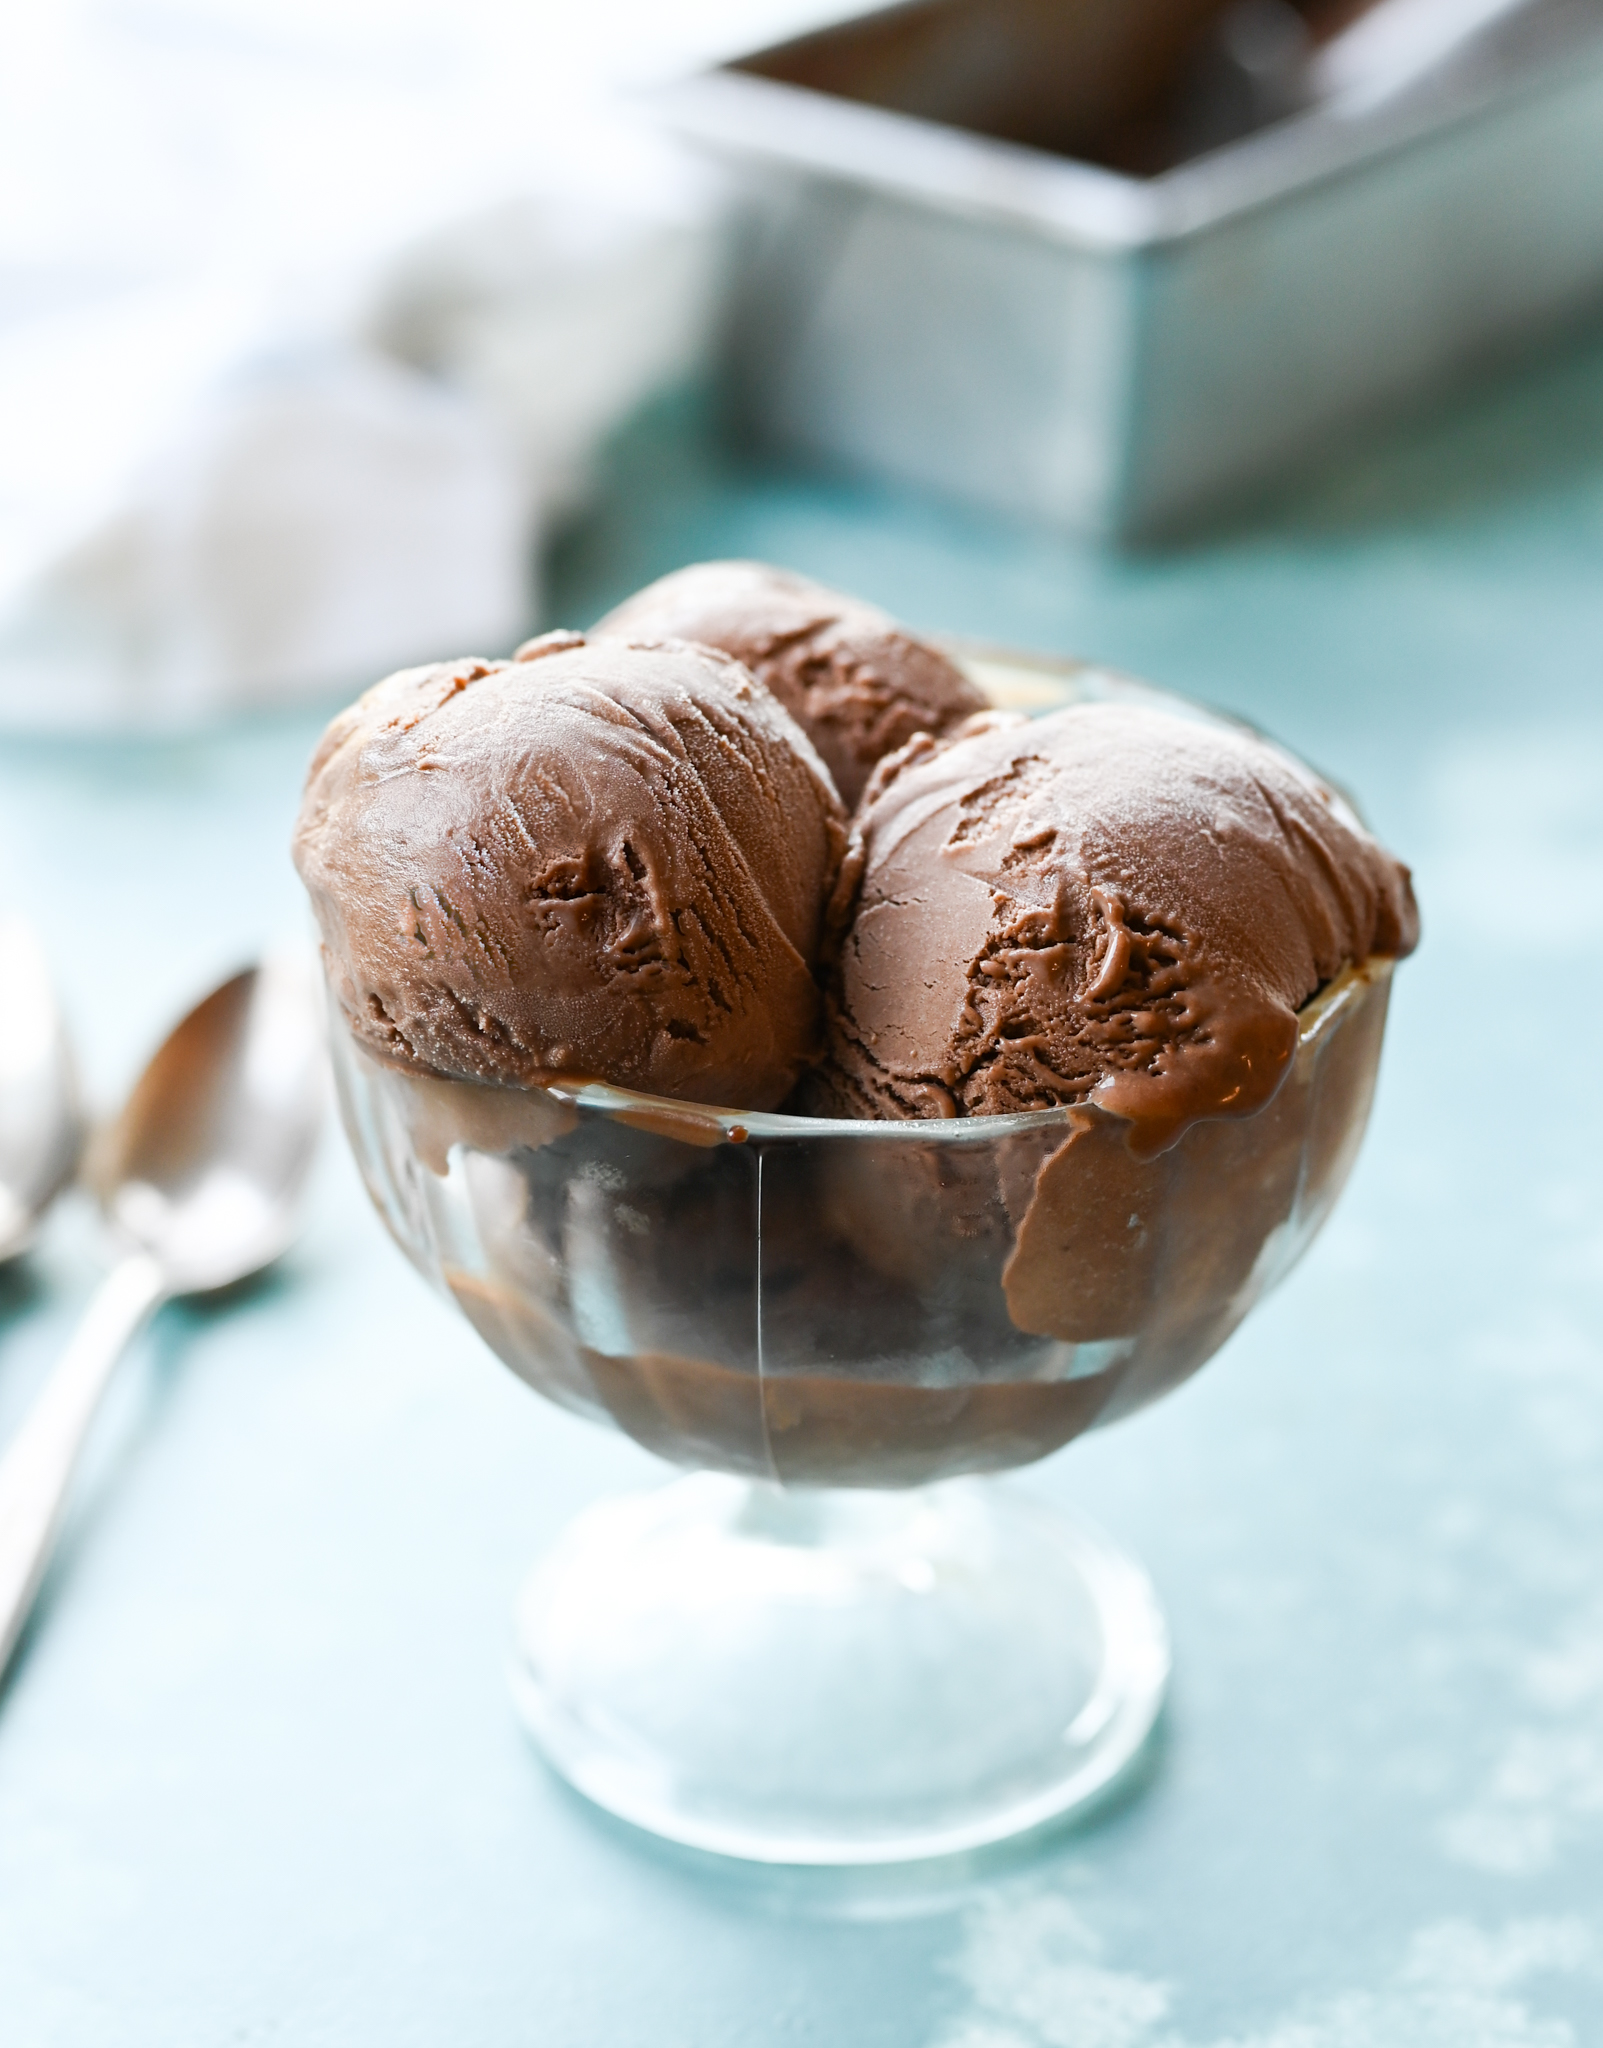 https://www.onceuponachef.com/images/2022/08/homemade-chocolate-ice-cream.jpg